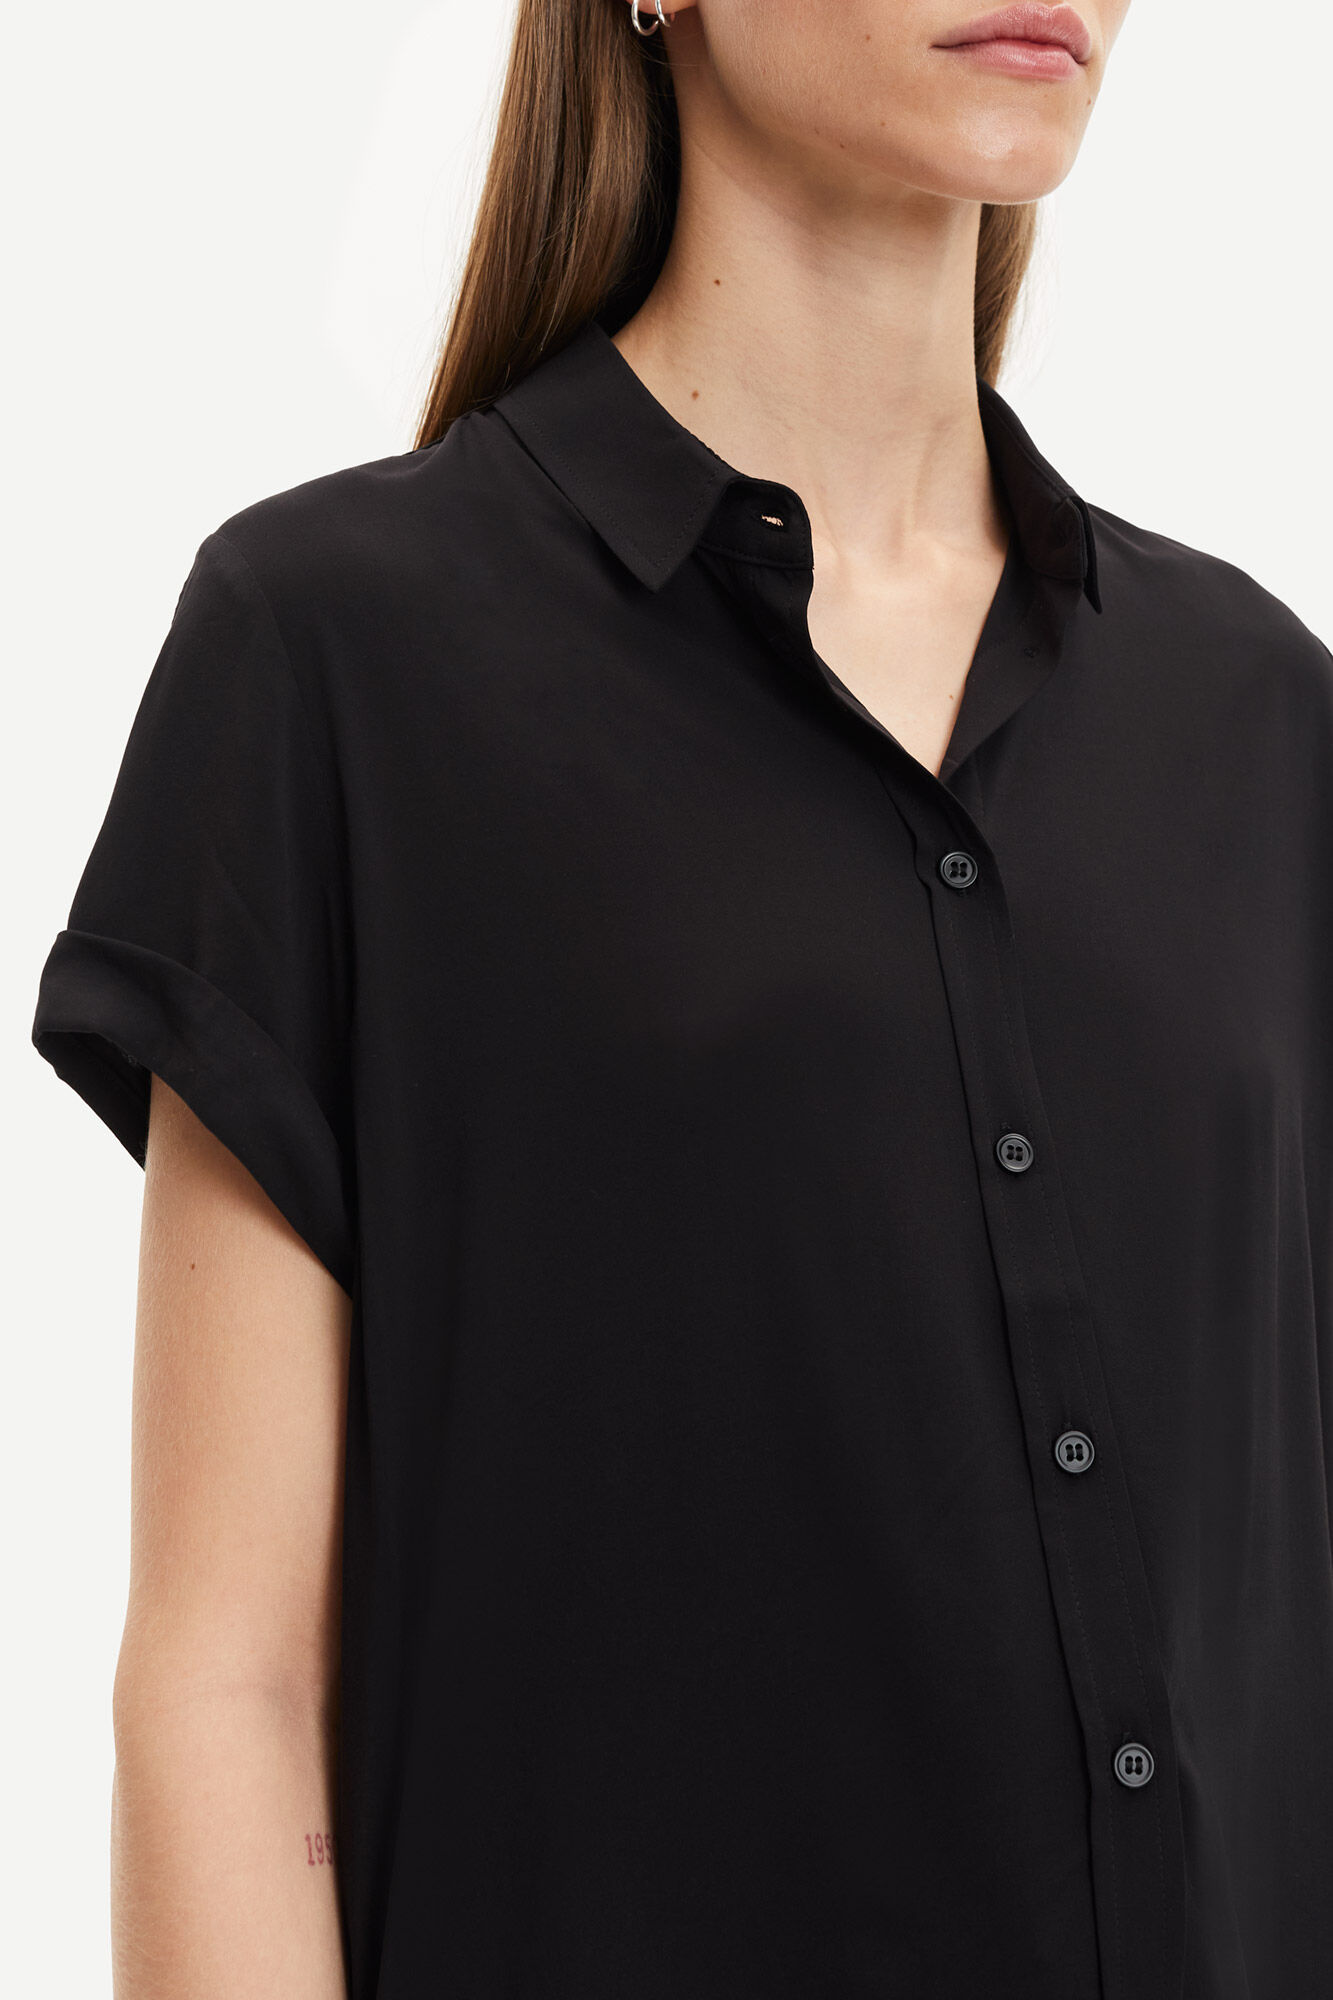 Sams\u00f8e & sams\u00f8e Kanten blouse zwart Webpatroon casual uitstraling Mode Blouses Kanten blouses Samsøe & samsøe